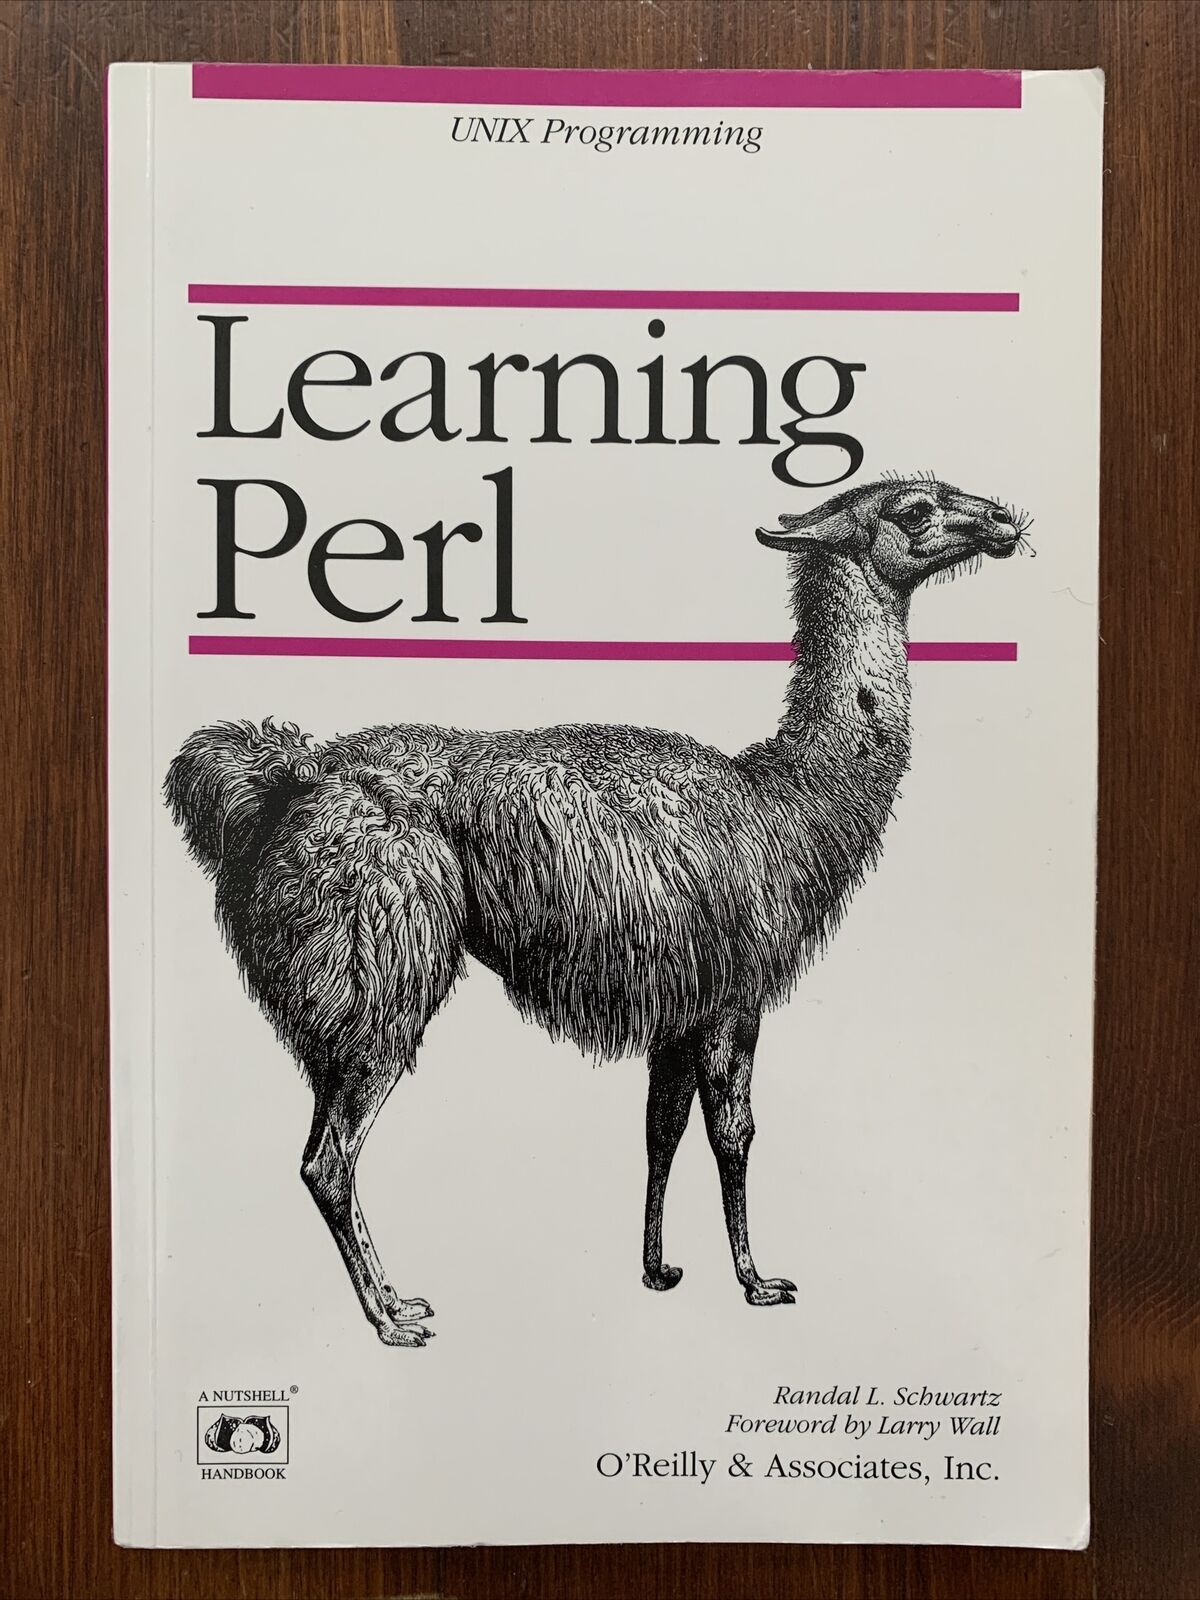 learning perl MRH7v